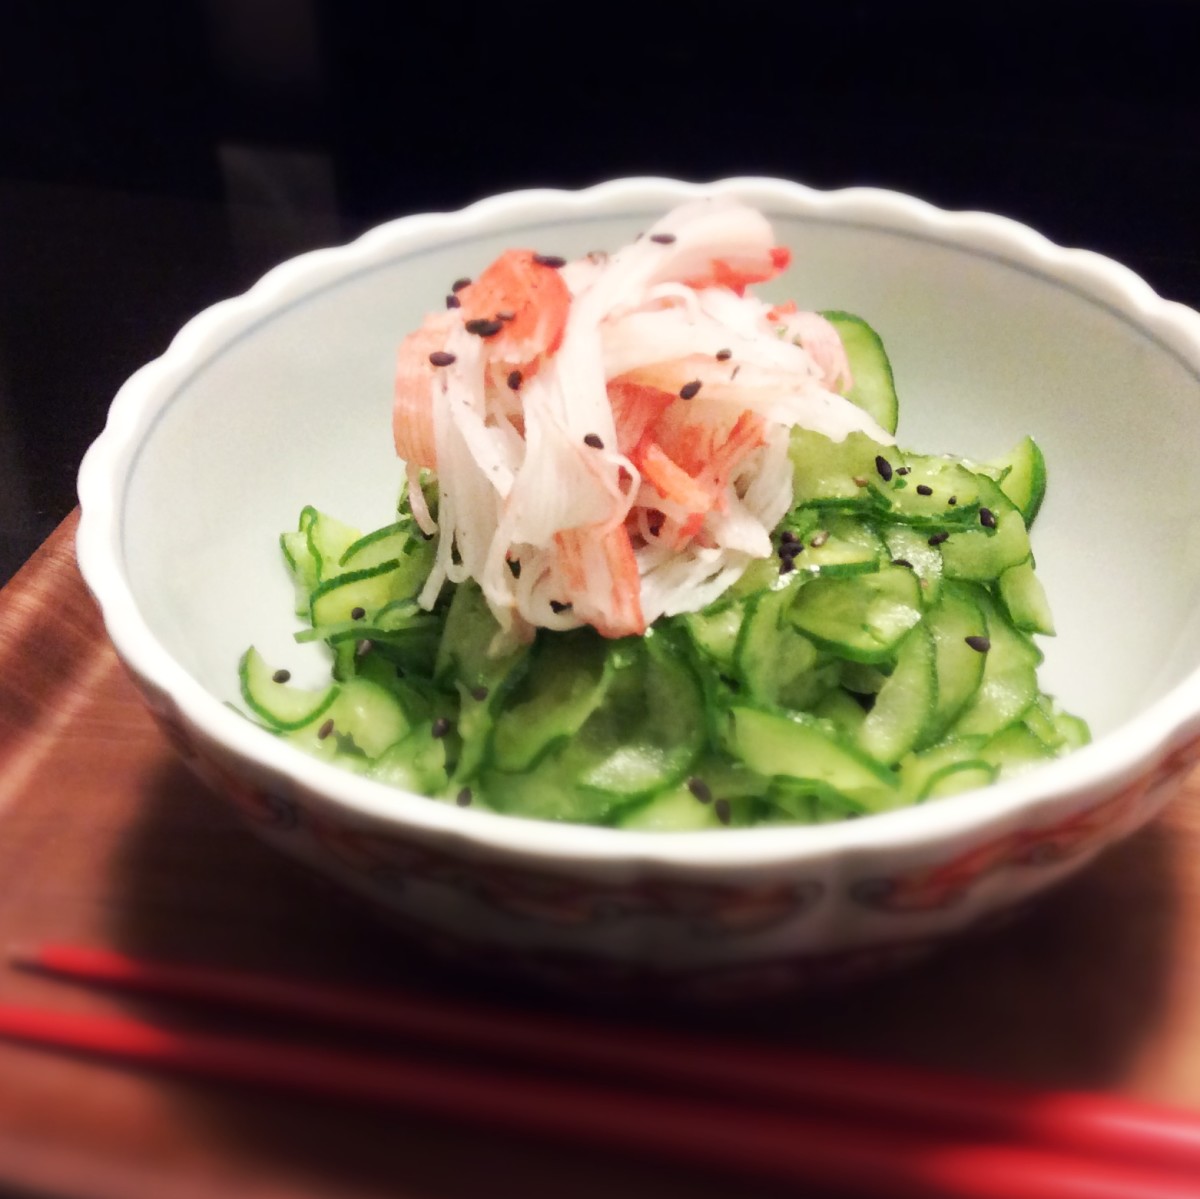 Cucumber and Imitation Crab Sunomono: A Simple Japanese Salad Recipe